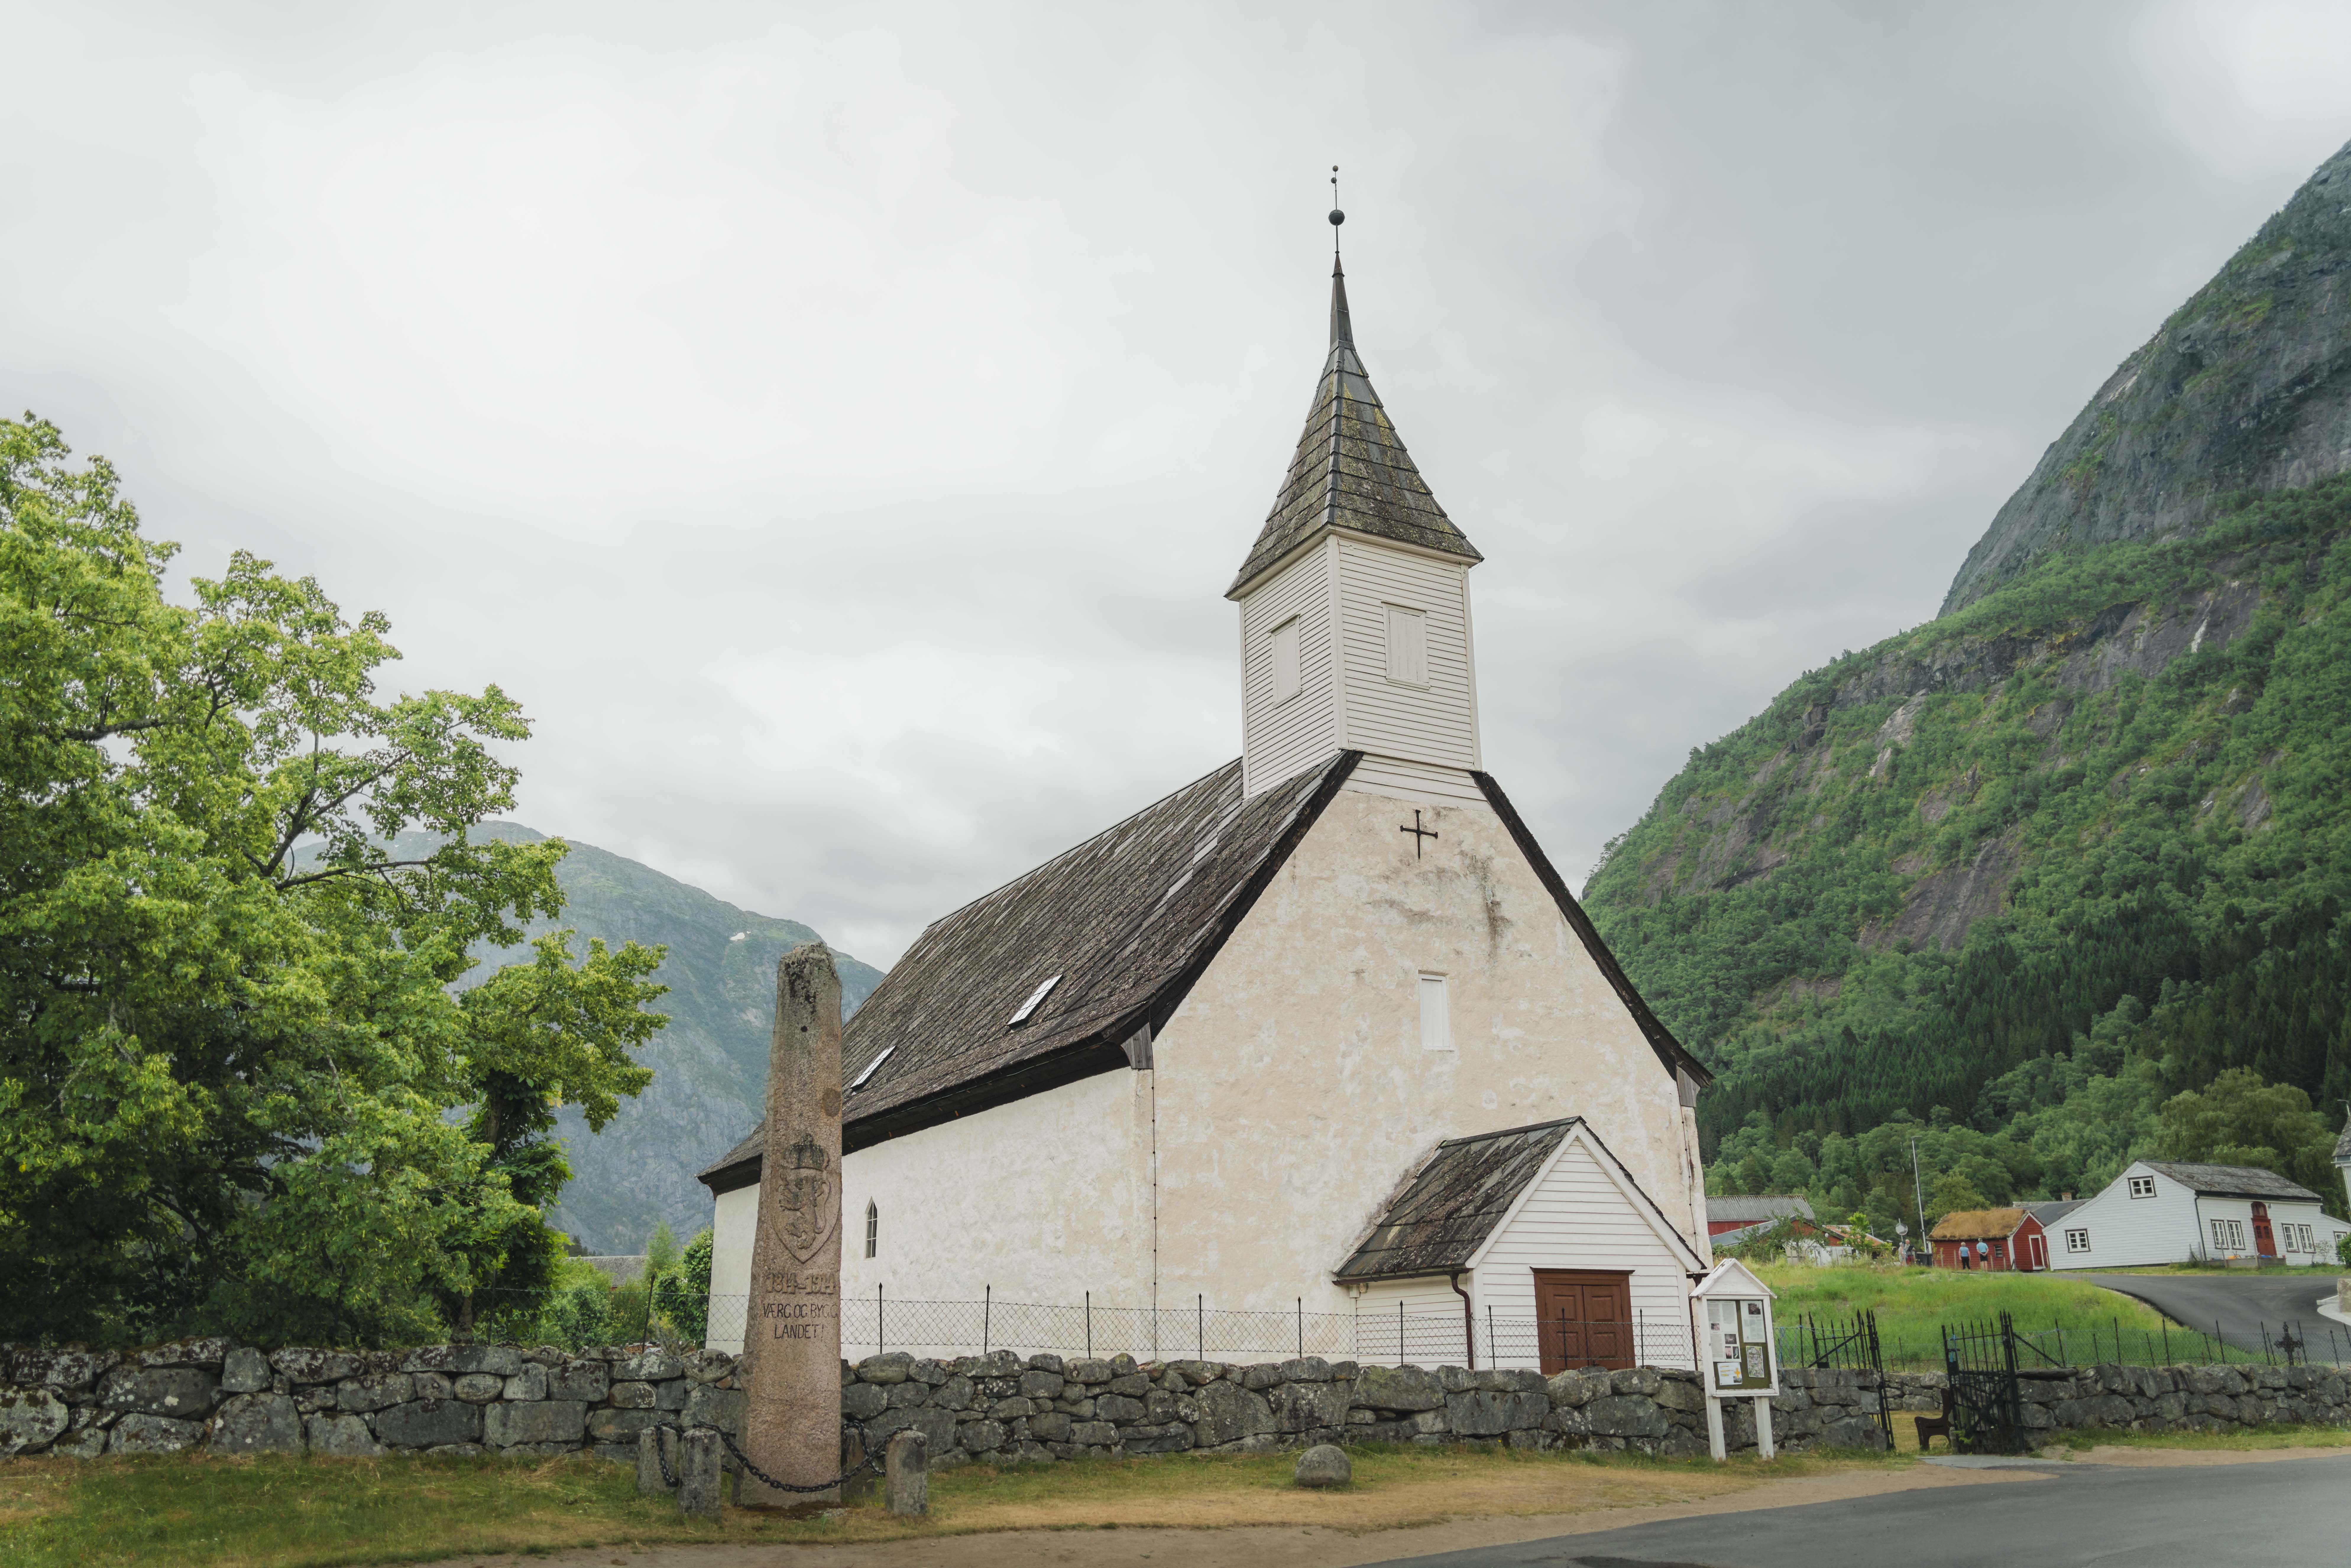 Eidfjord Old Church